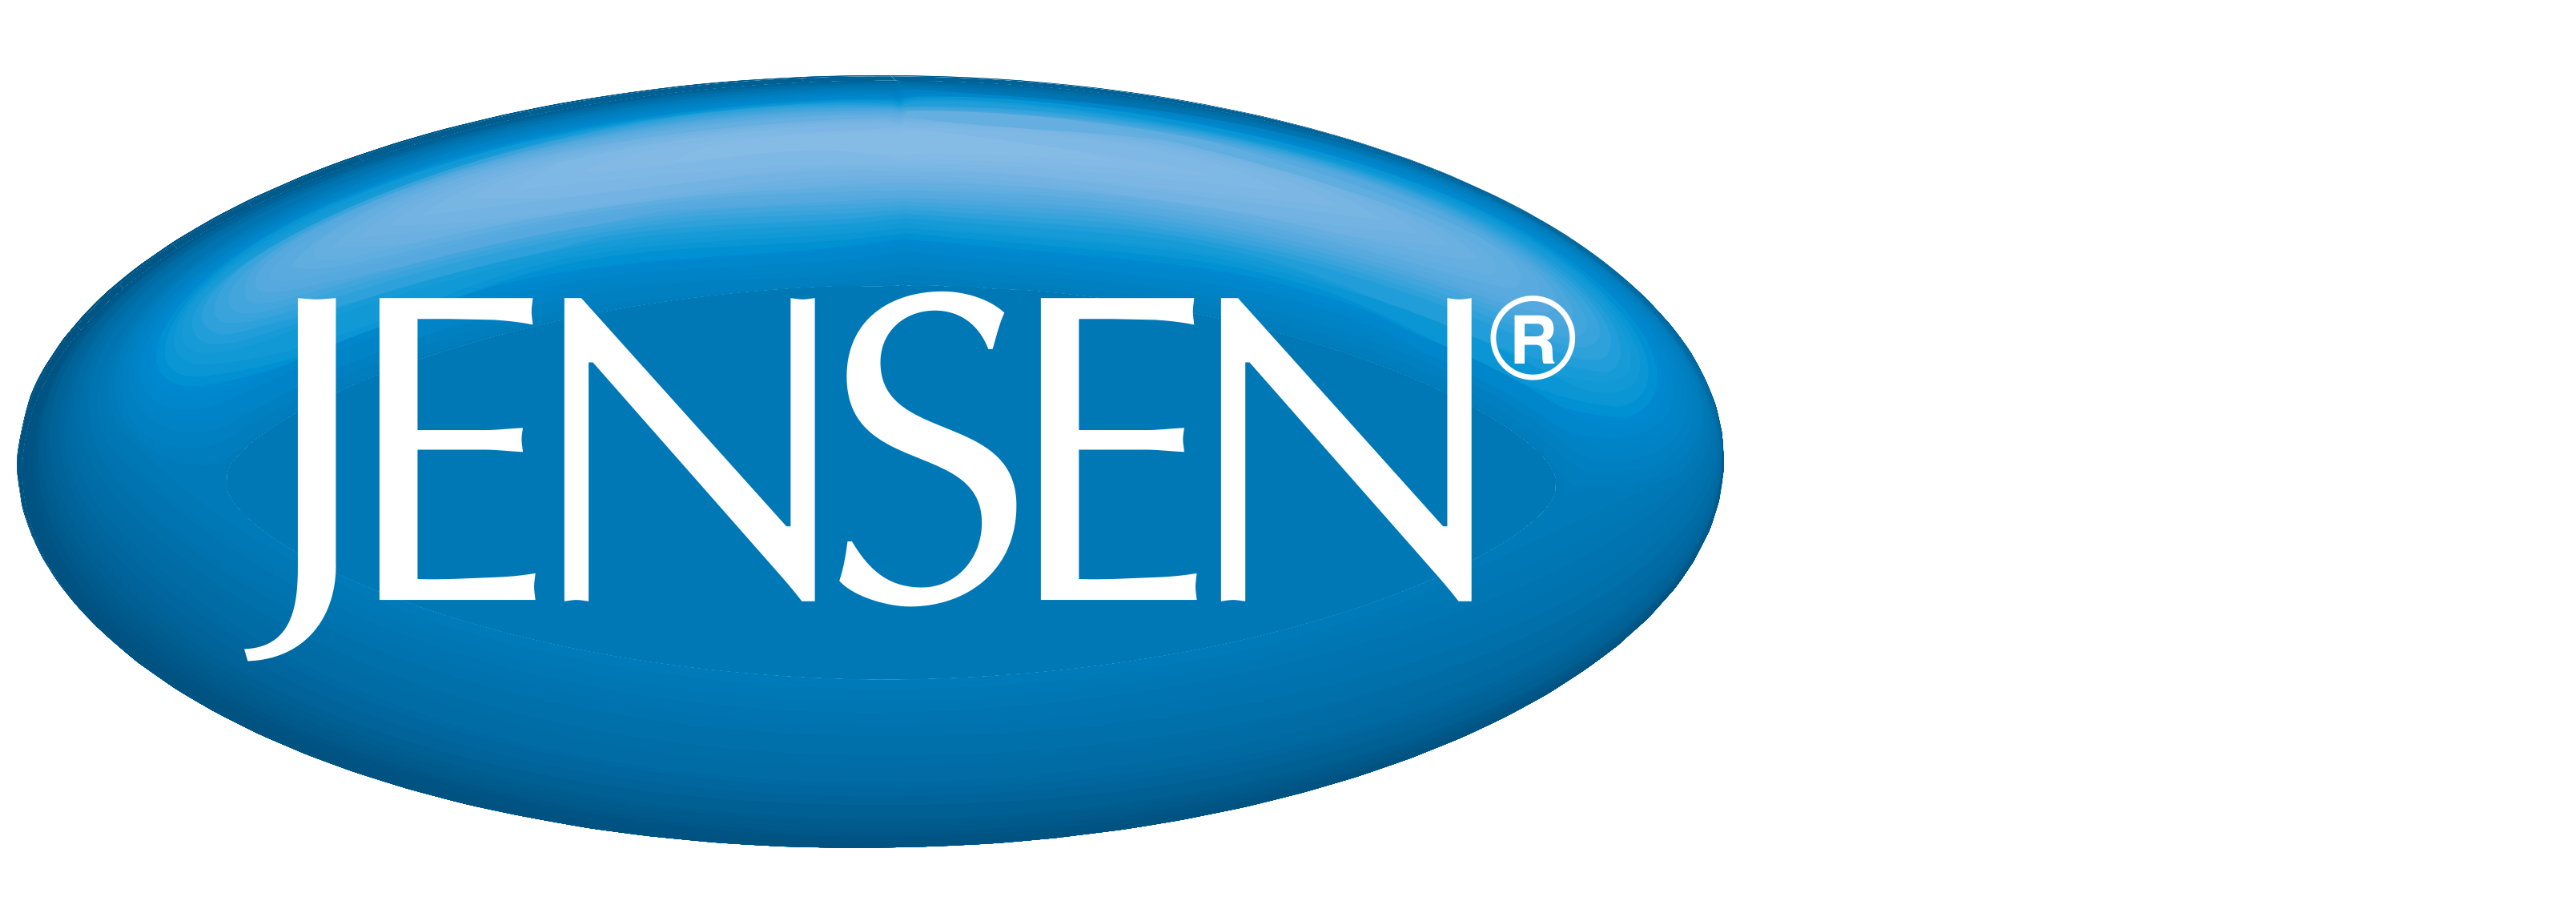 001-merken/jensen/001-logos/jensen-logo.png